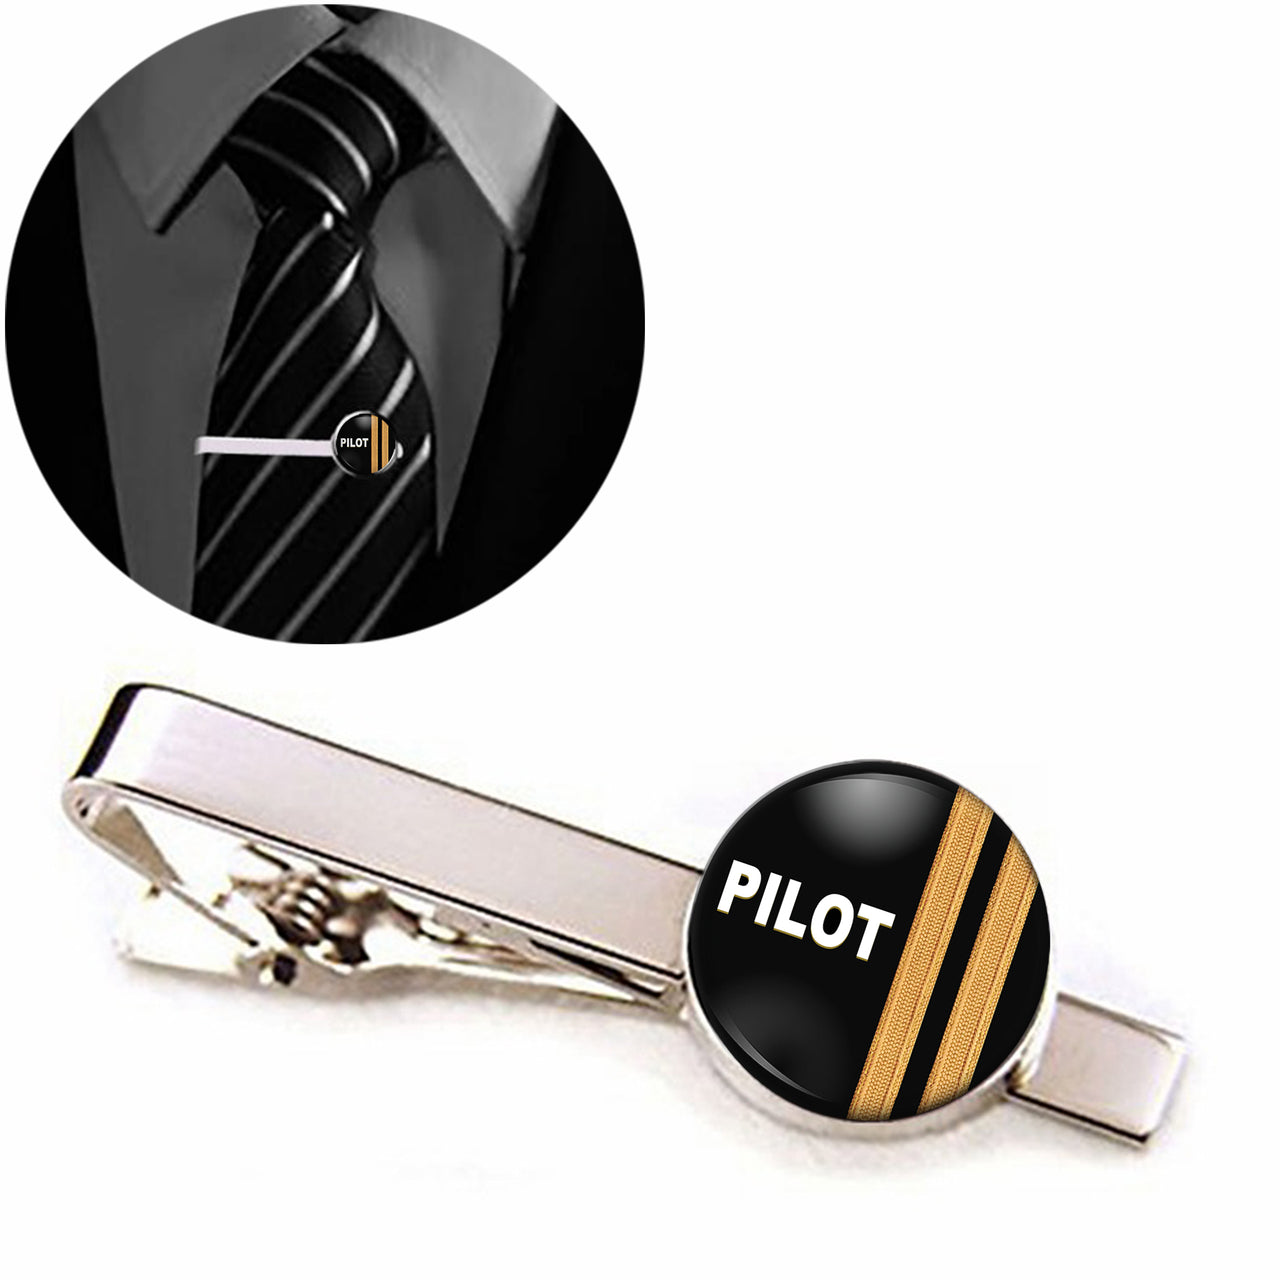 PILOT & Epaulettes 2 Lines Designed Tie Clips